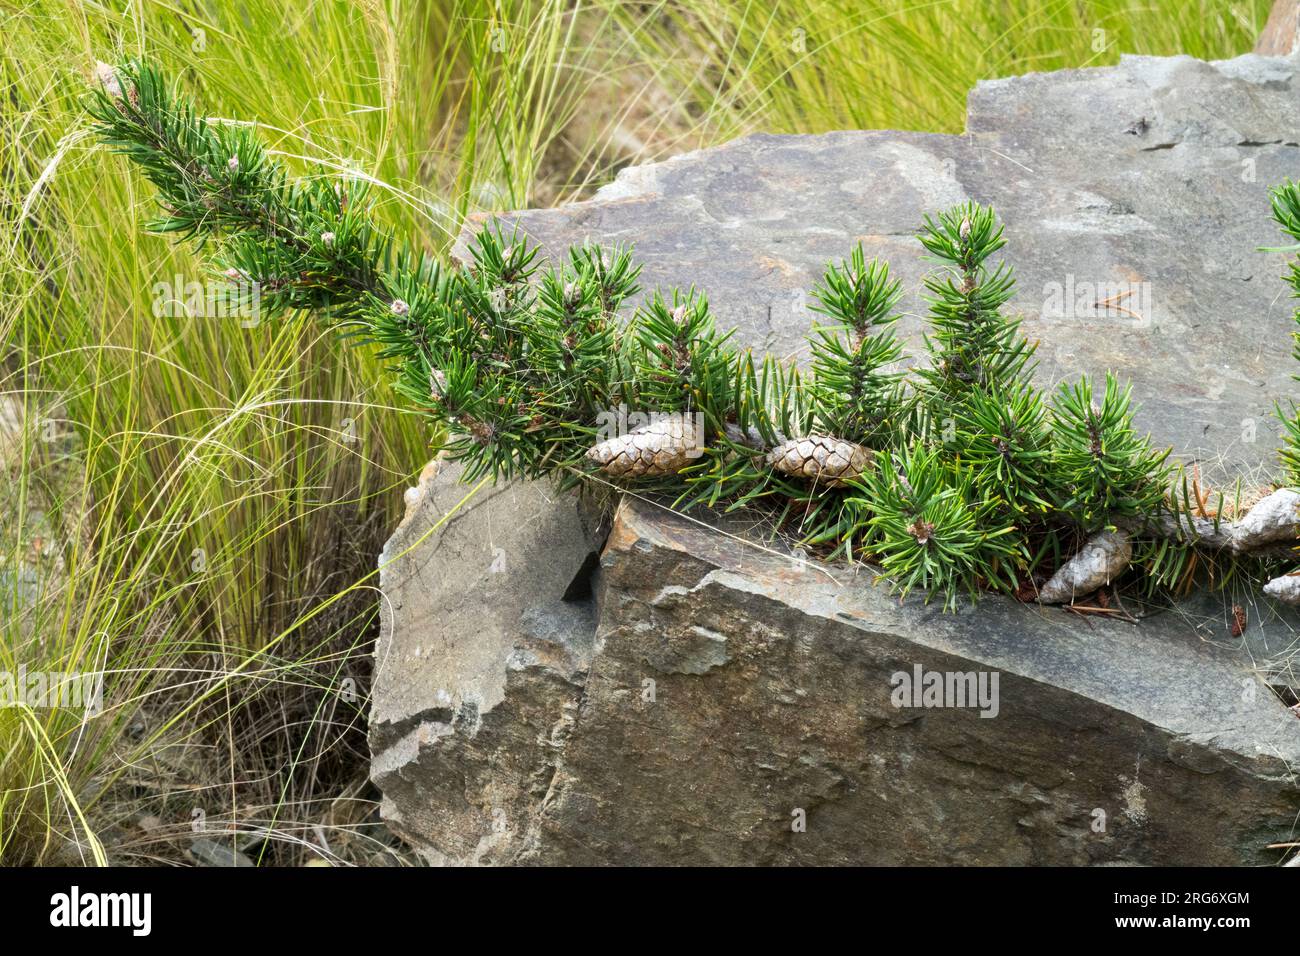 Jack Pine, Pinus banksiana branch on stone with cones Stock Photo